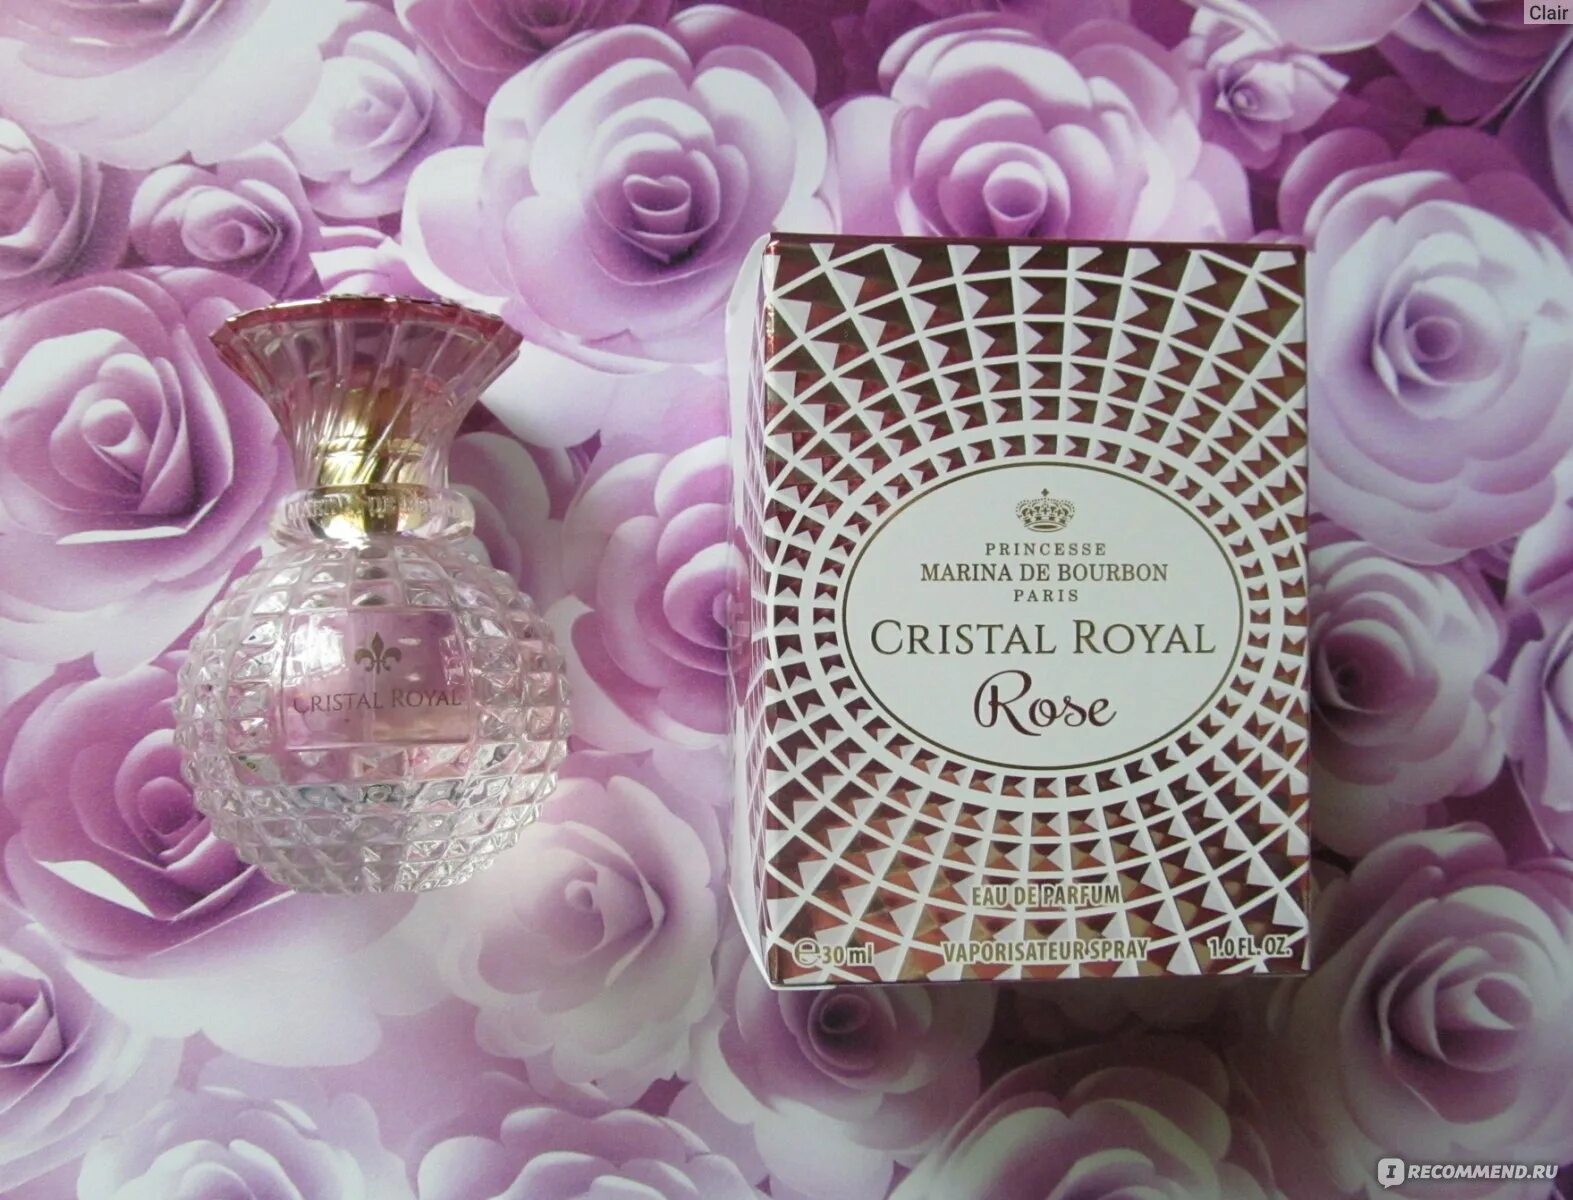 Crystal royal. Marina de Bourbon Crystal Royal. Marina de Bourbon Crystal Royal Rose. Marina de Bourbon Rose.